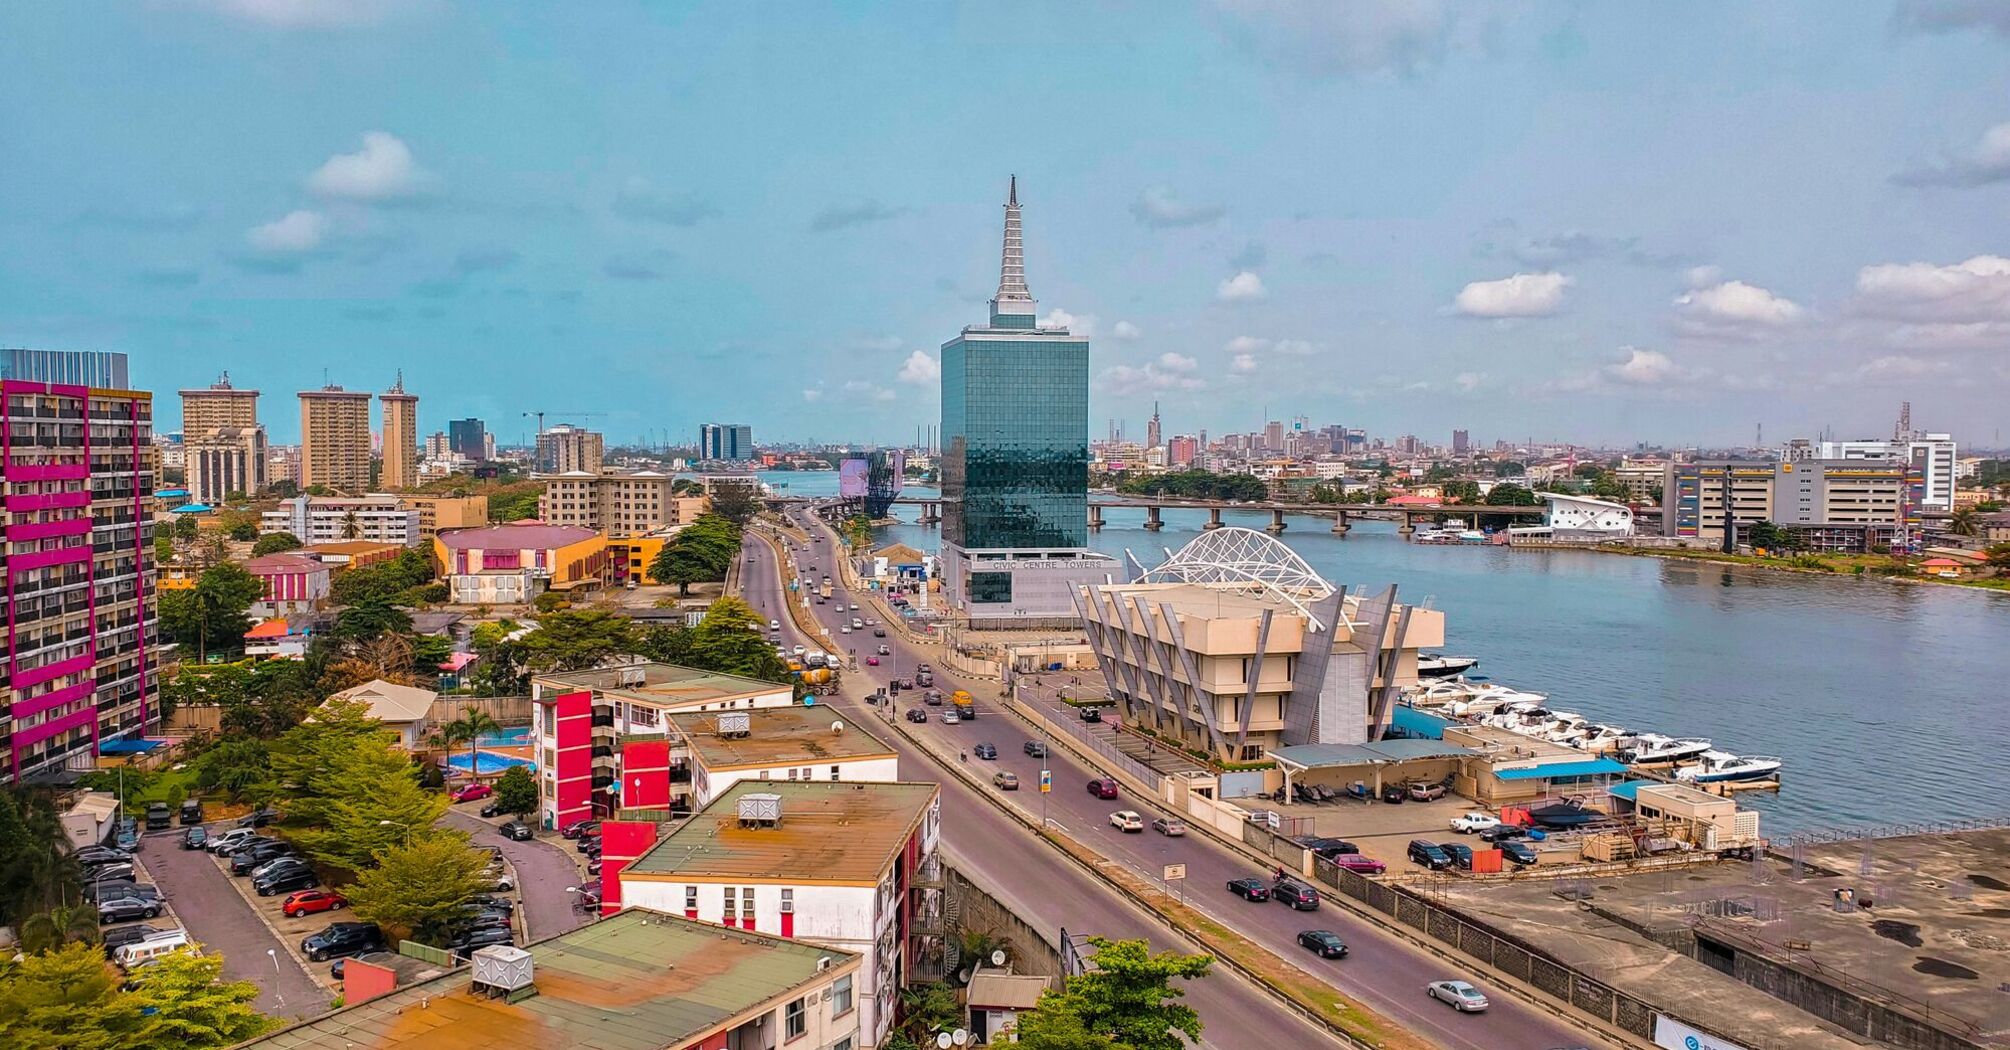 Civic Towers, Lekki, Lagos Nigeria